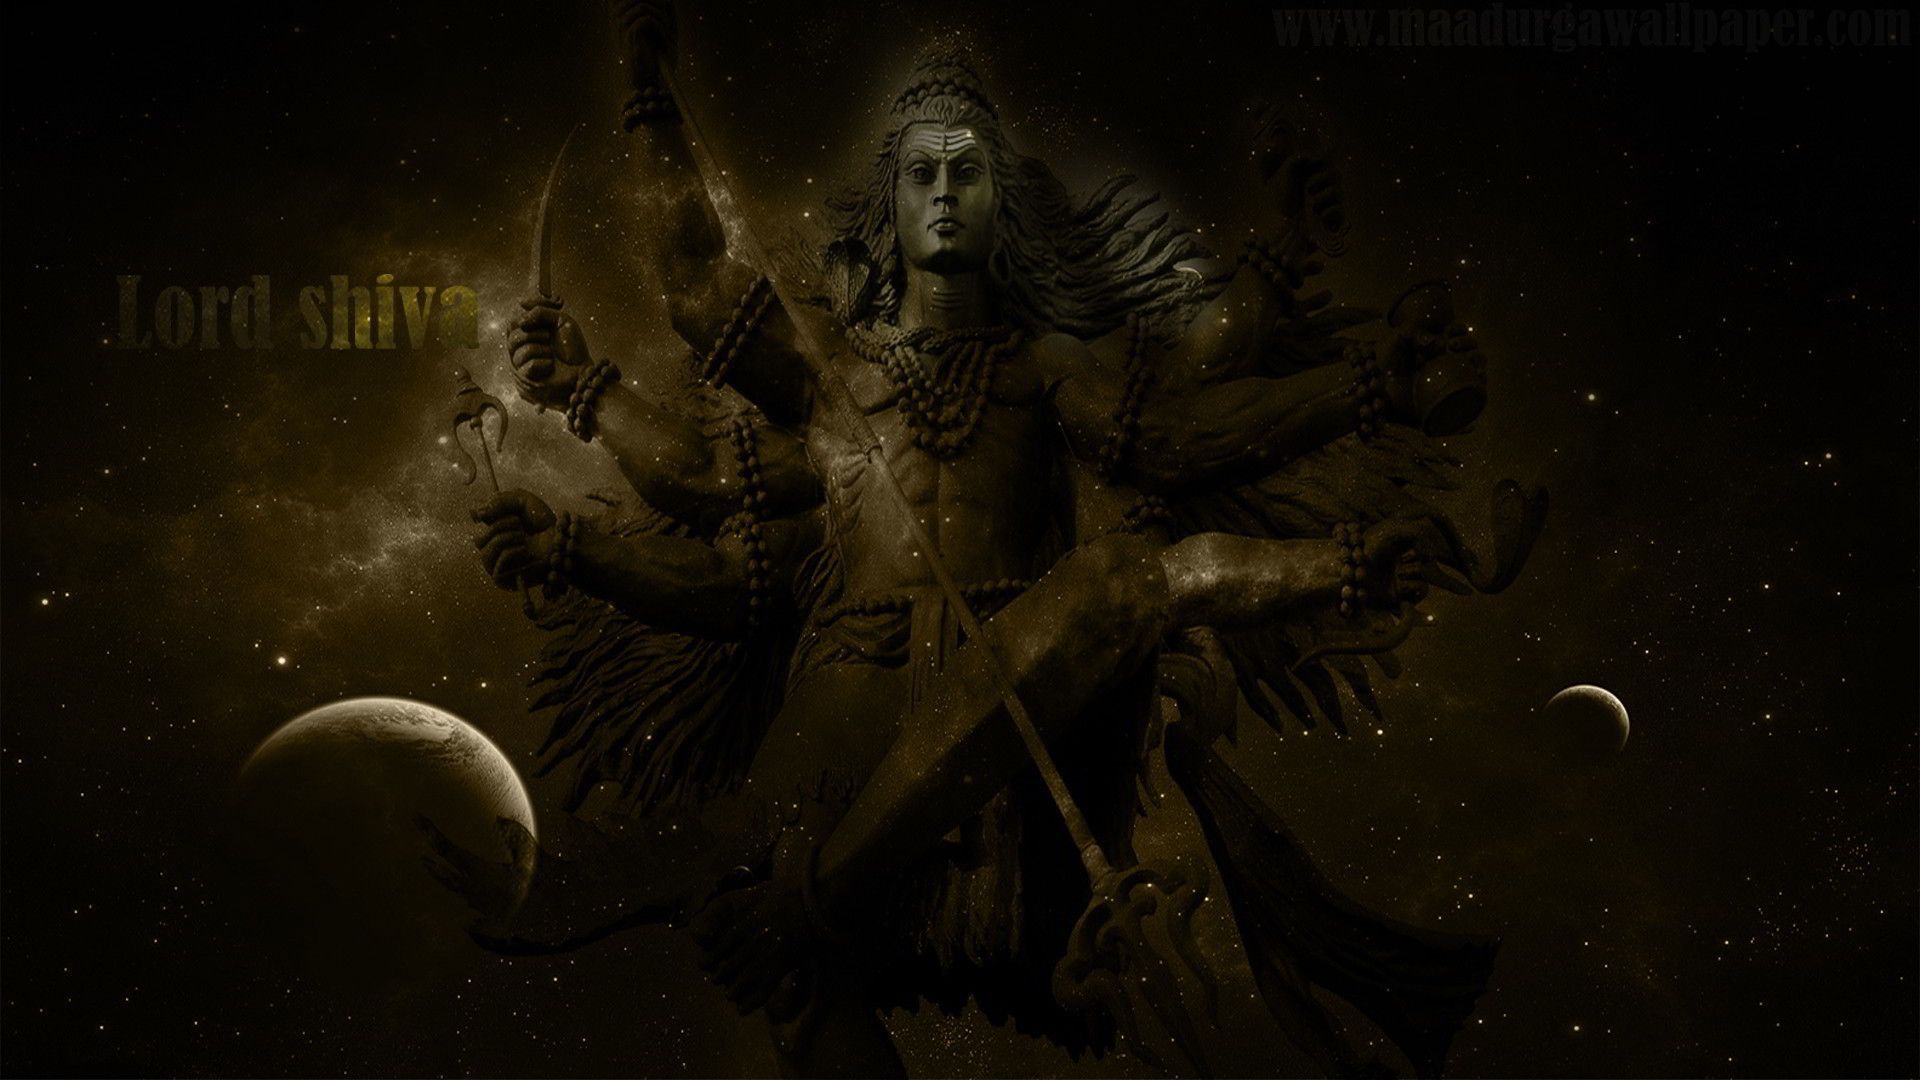 Shiv Photo Wallpaper 1920x1080 iPhone. Shiva wallpaper, Lord